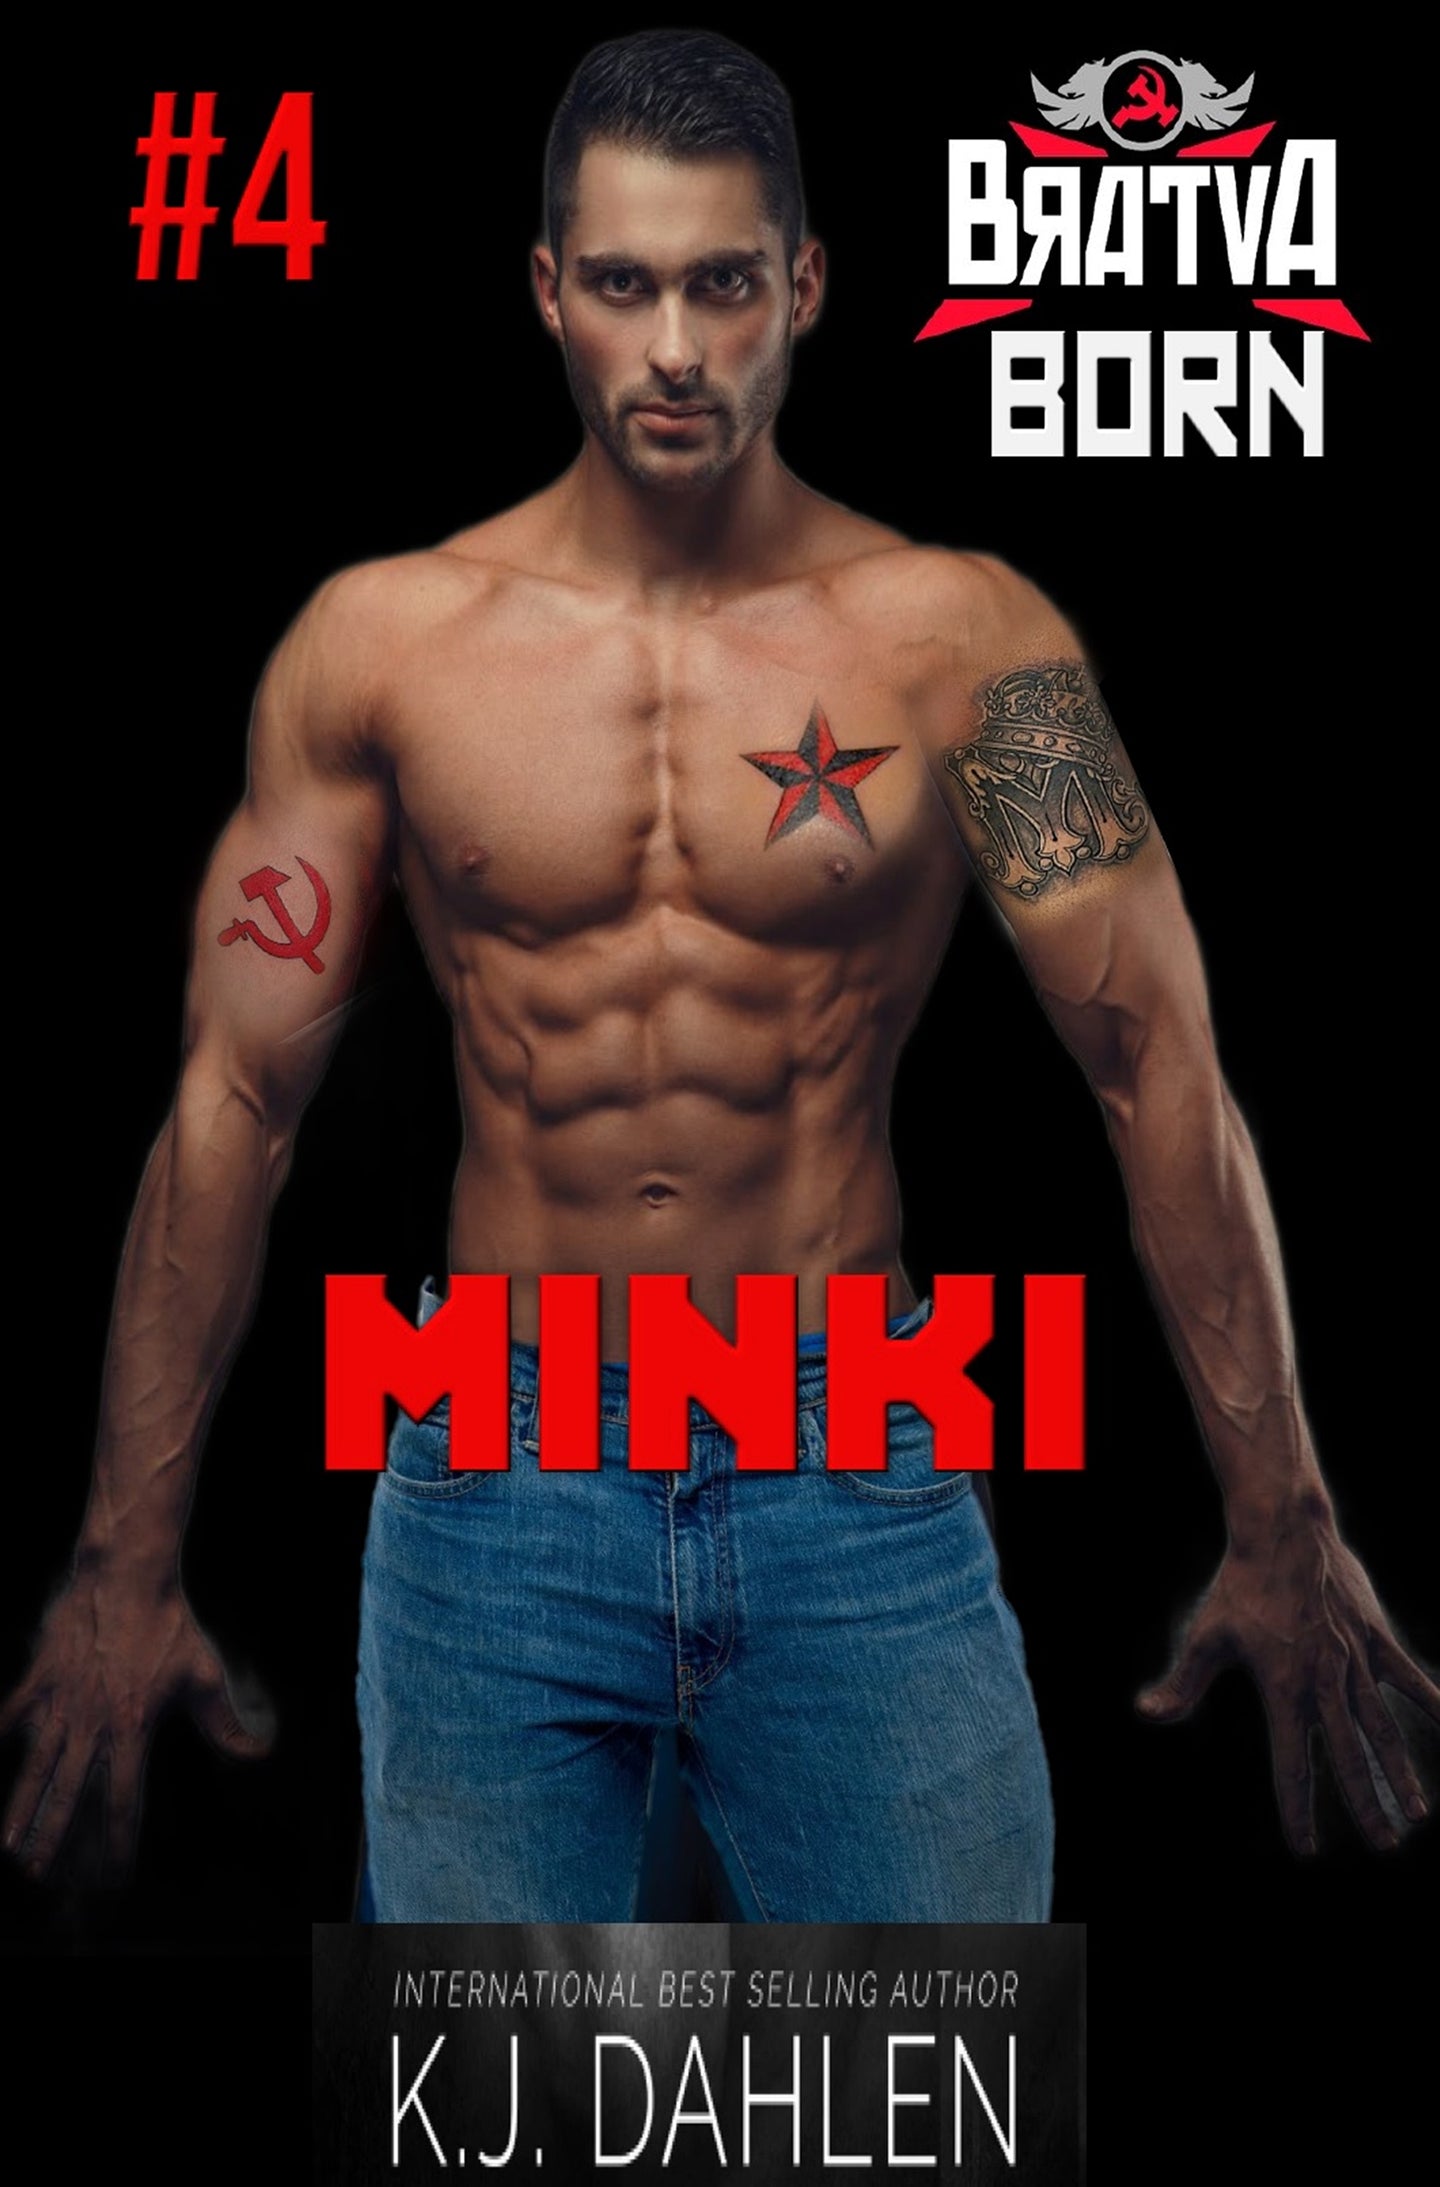 Minki-Bratva Born#4-Single